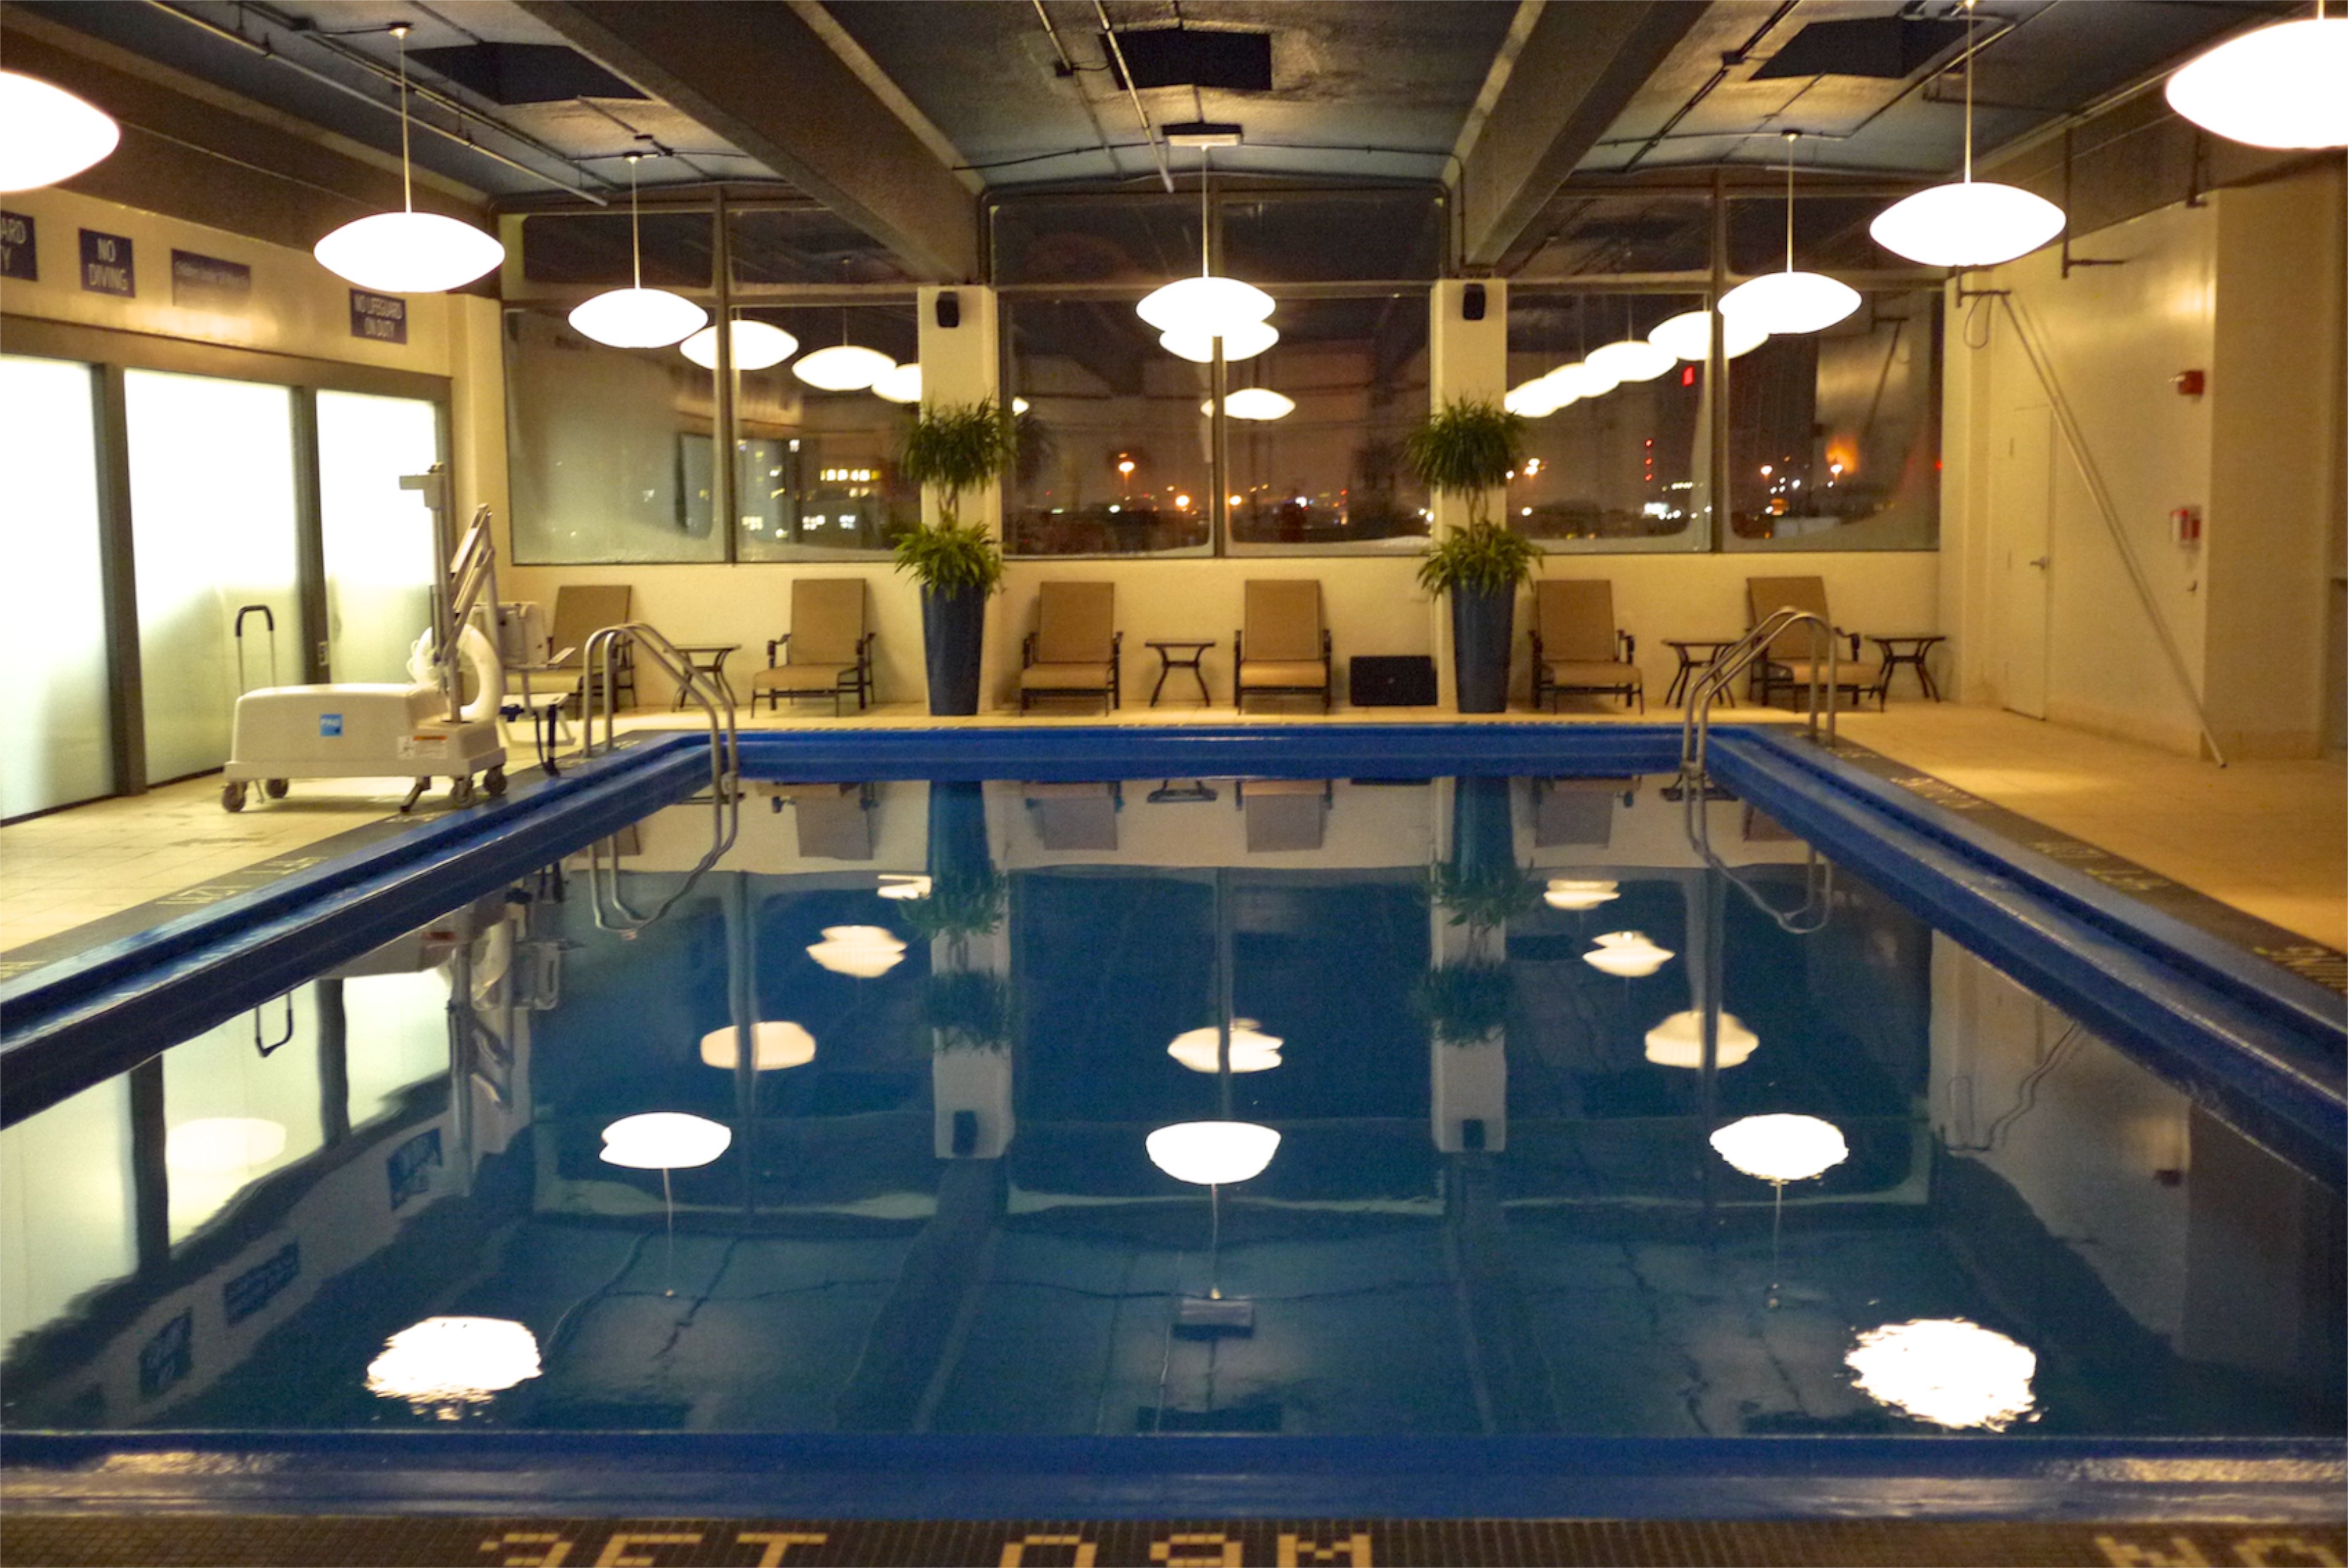 Un hôtel de luxe avec piscine: on y prend goût!